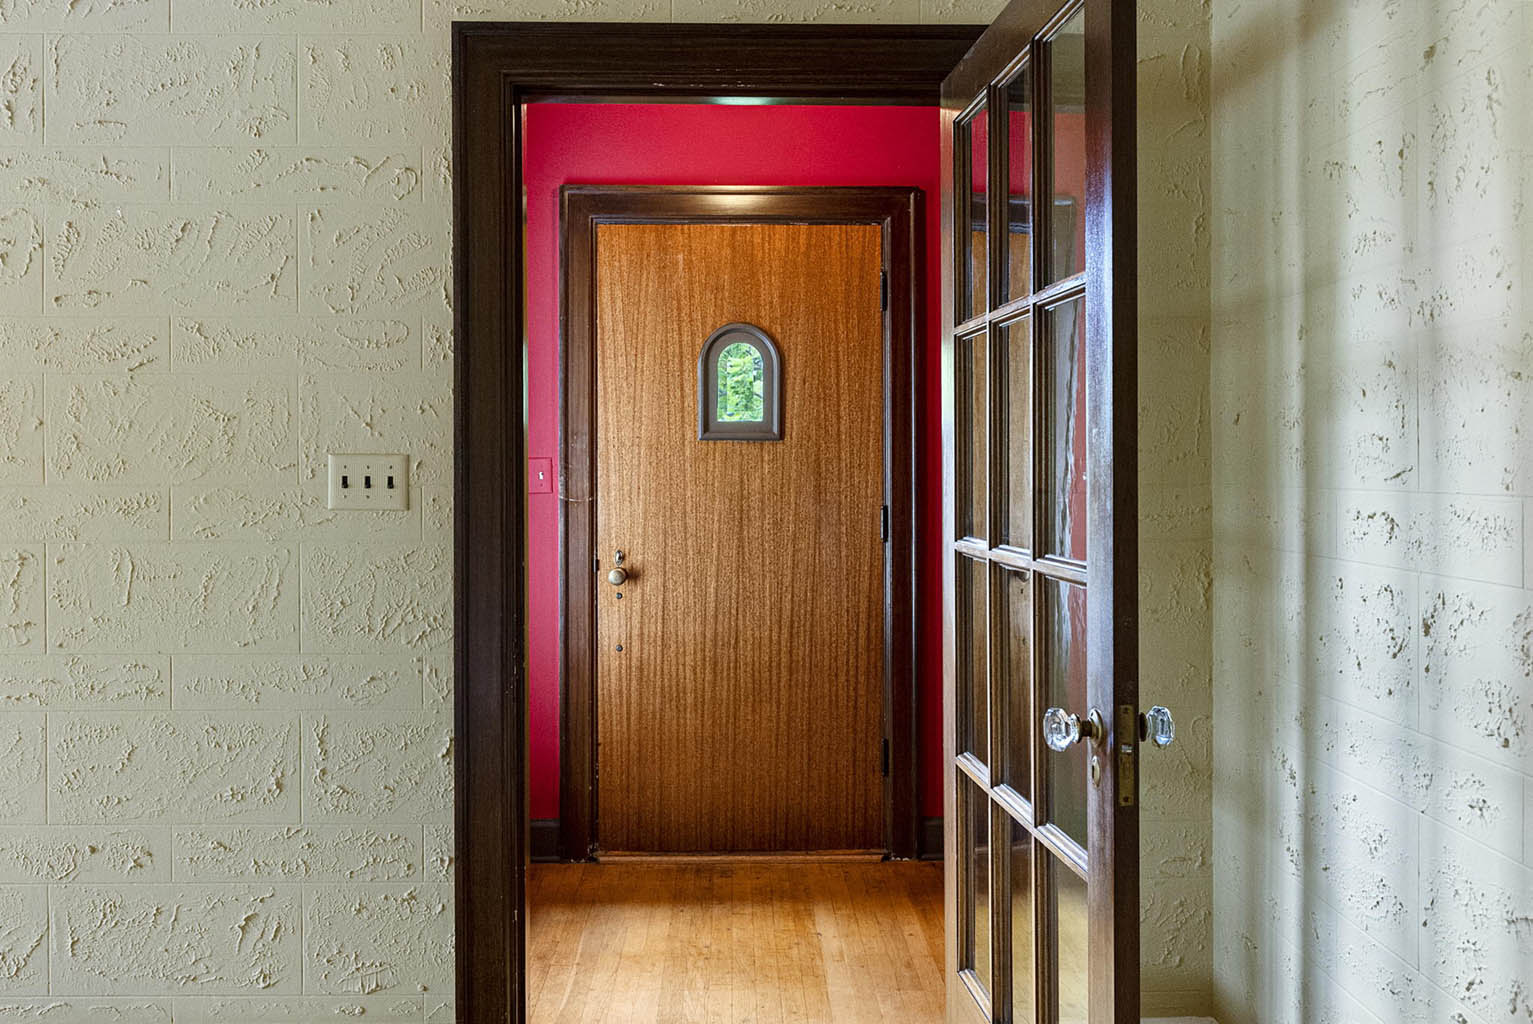 Enclosed entry foyer